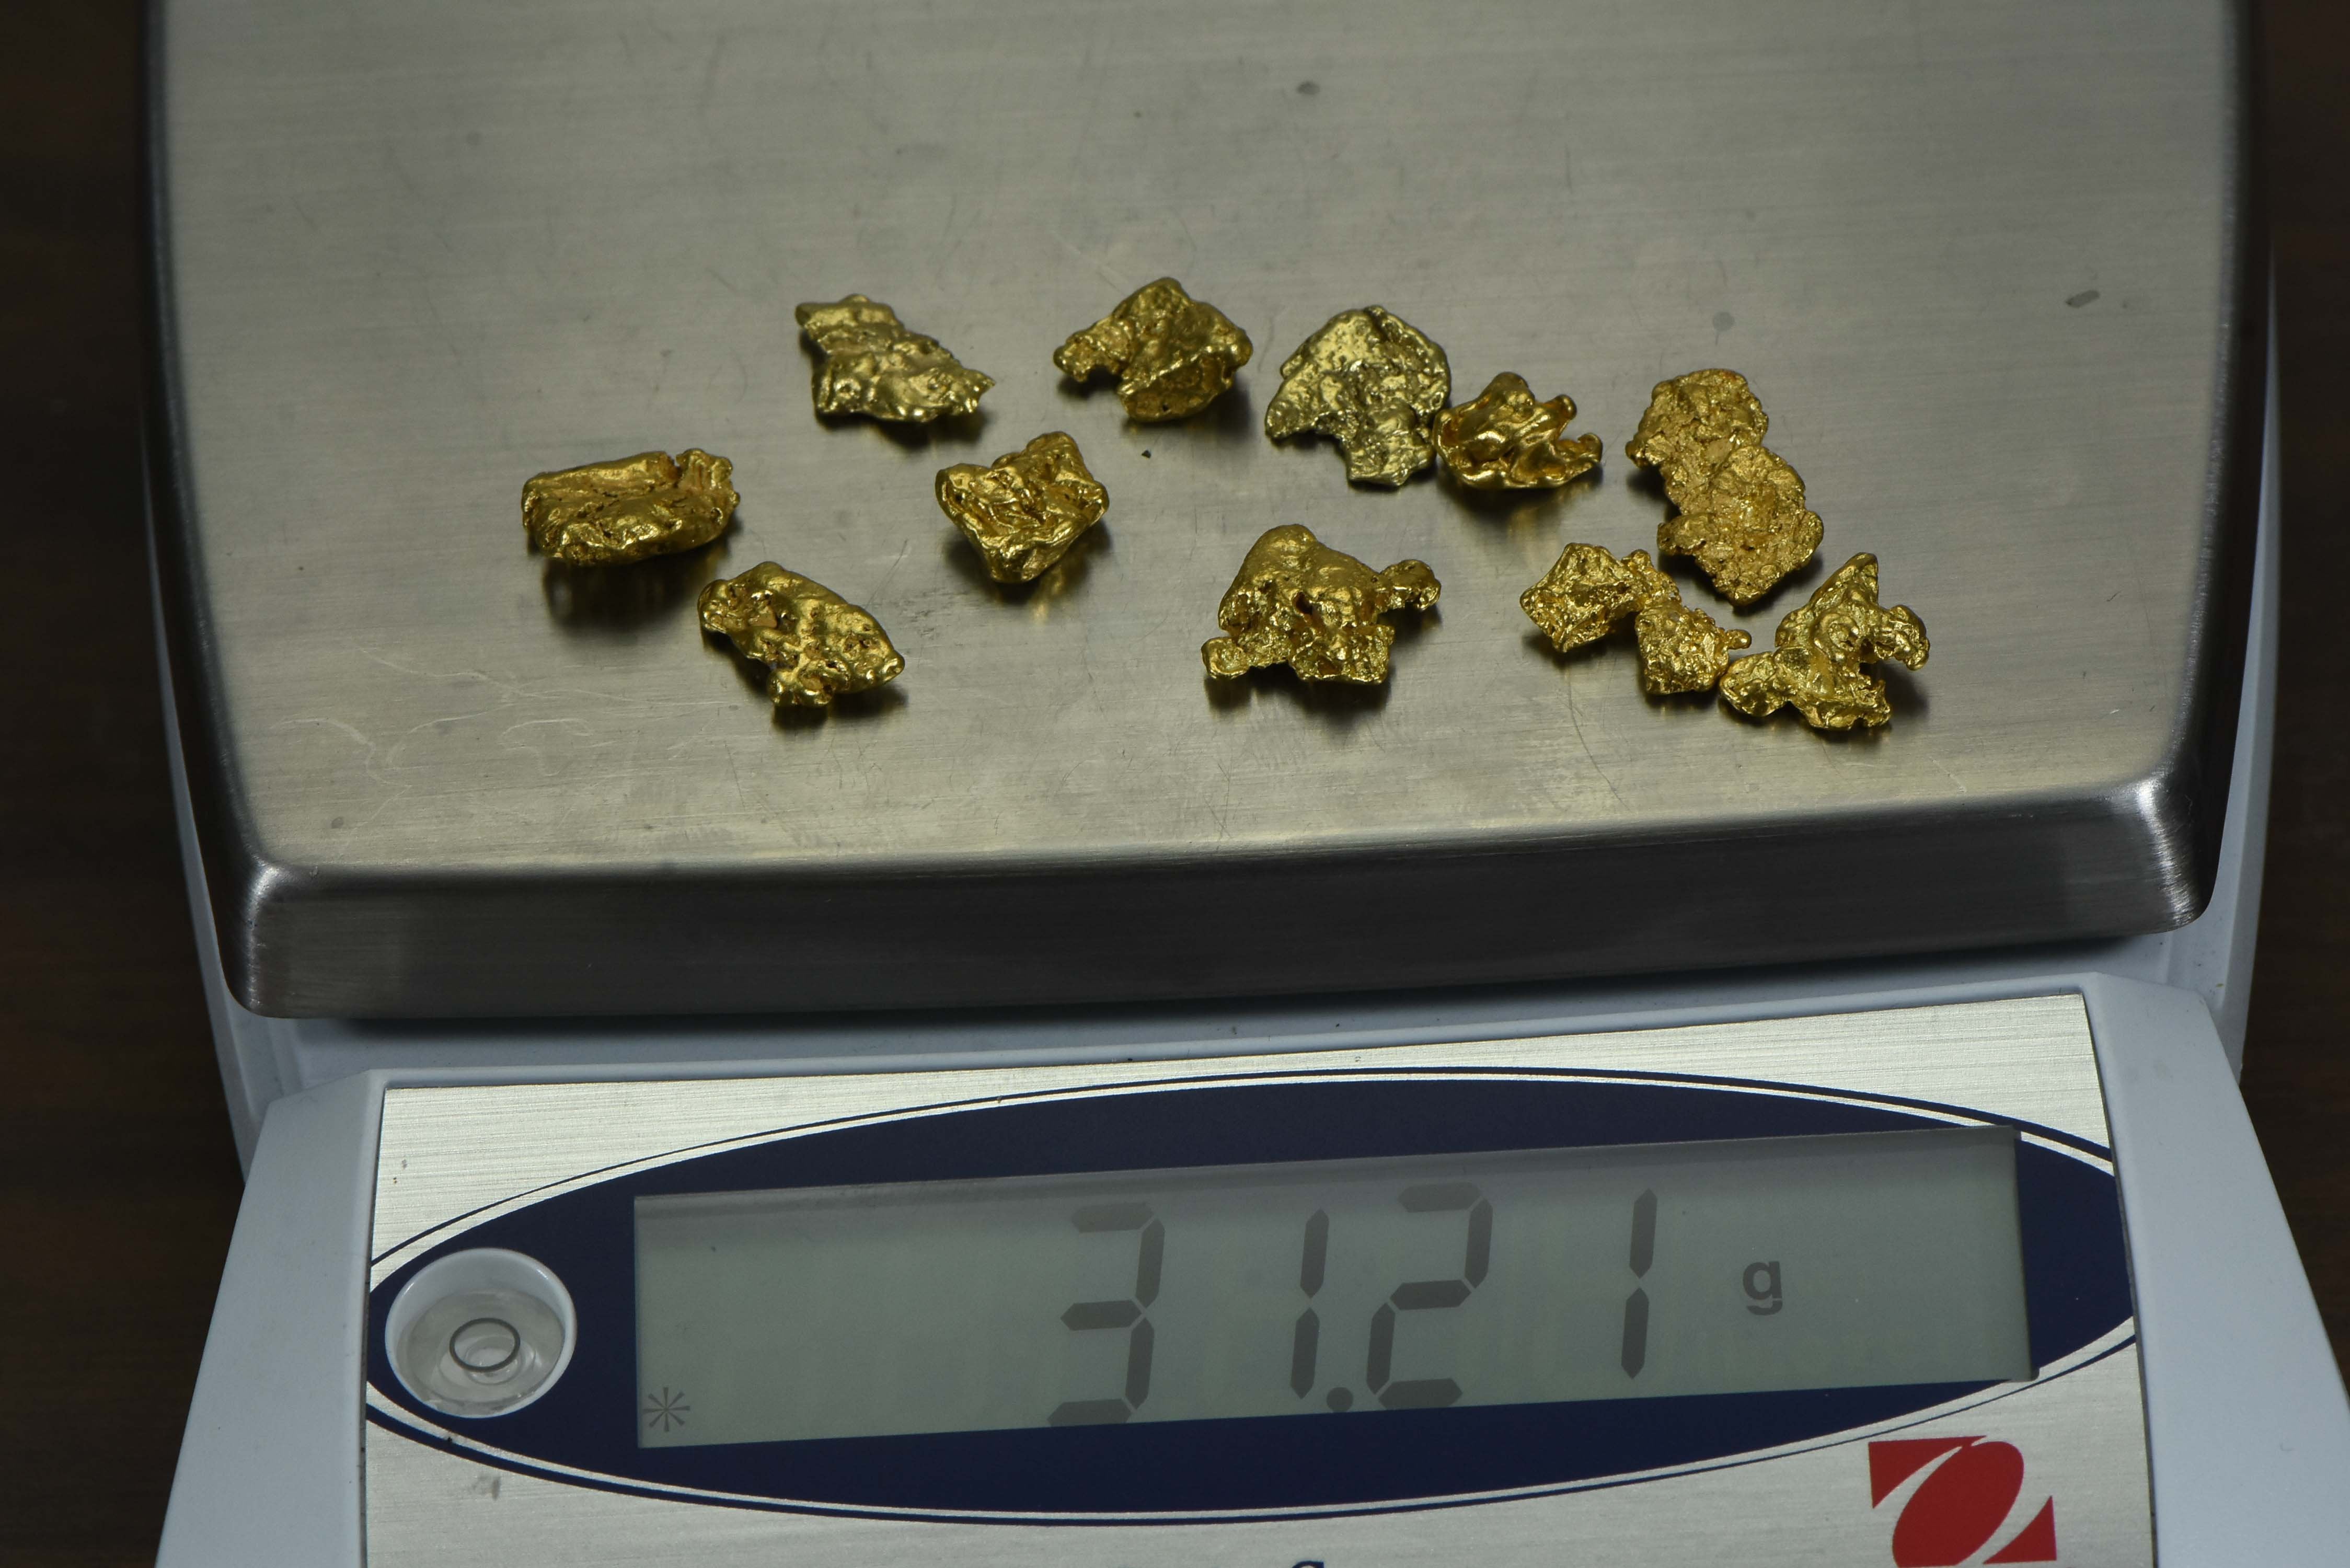 Alaskan Bc Natural Gold Nugget 31.10 Gram Lot Of 2 To 5 Gram Nuggets Genuine 1 Troy Oz. Alaska